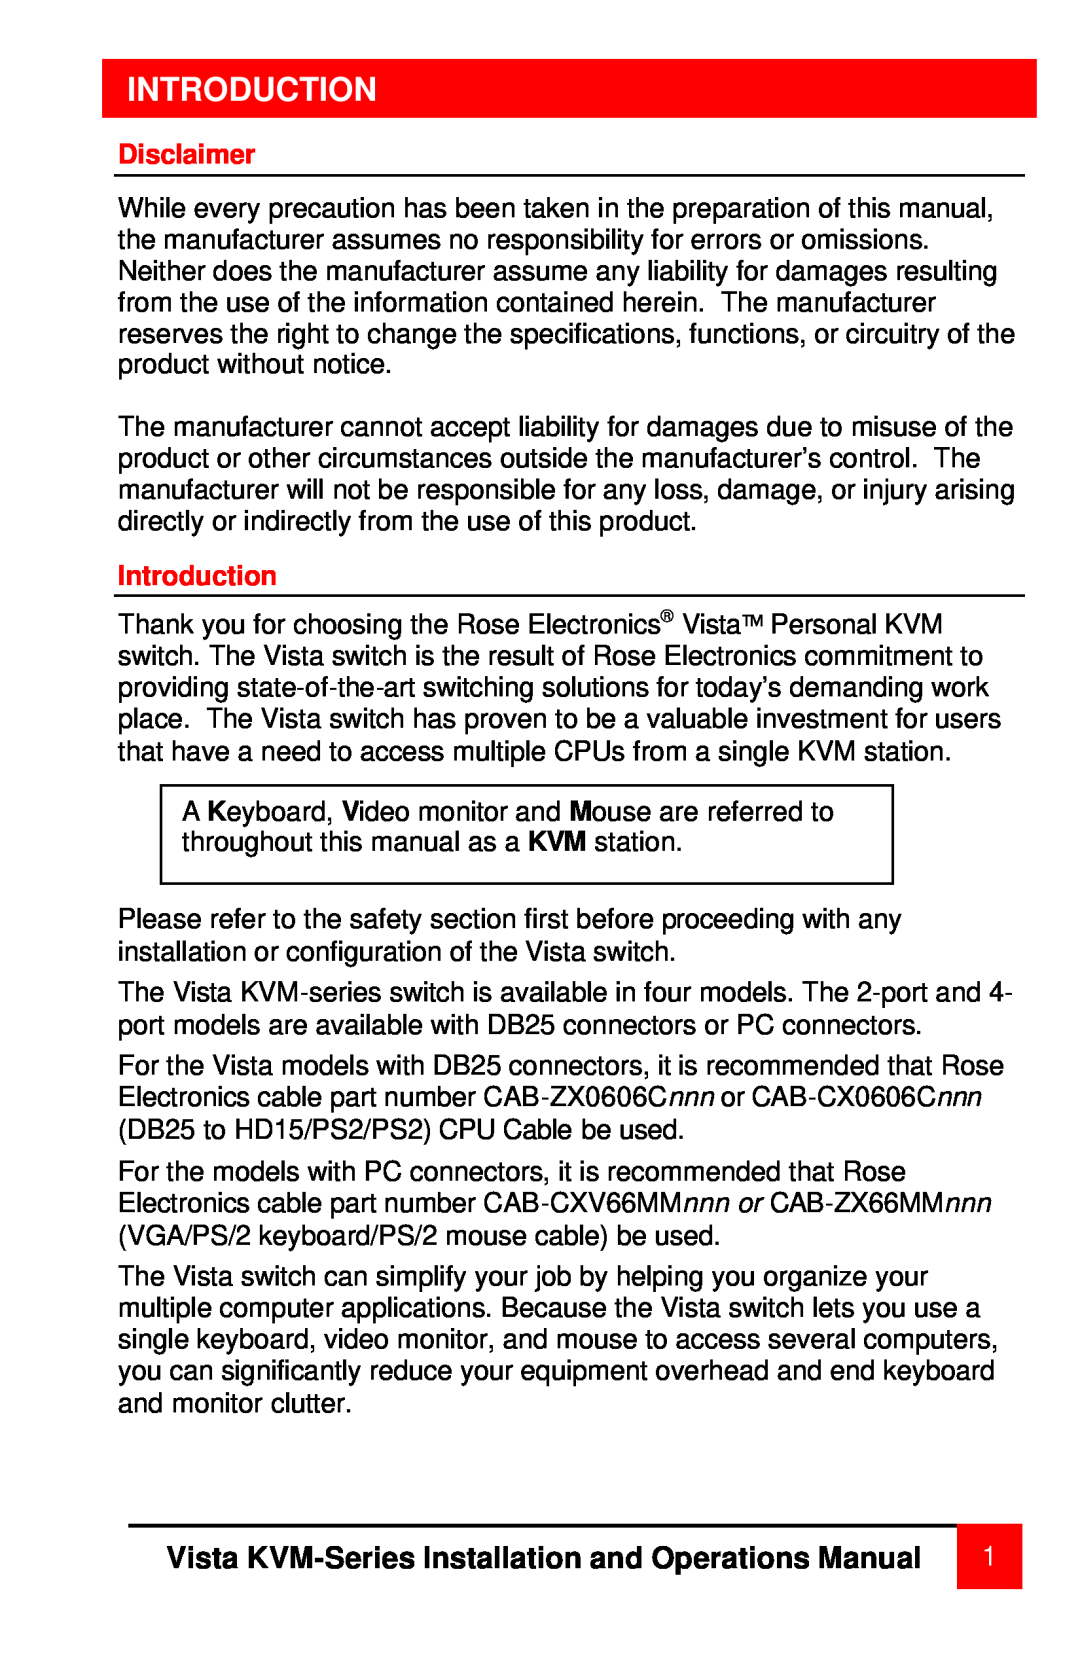 Rose electronic MAN-V8 manual Introduction, Vista KVM-Series Installation and Operations Manual, Disclaimer 